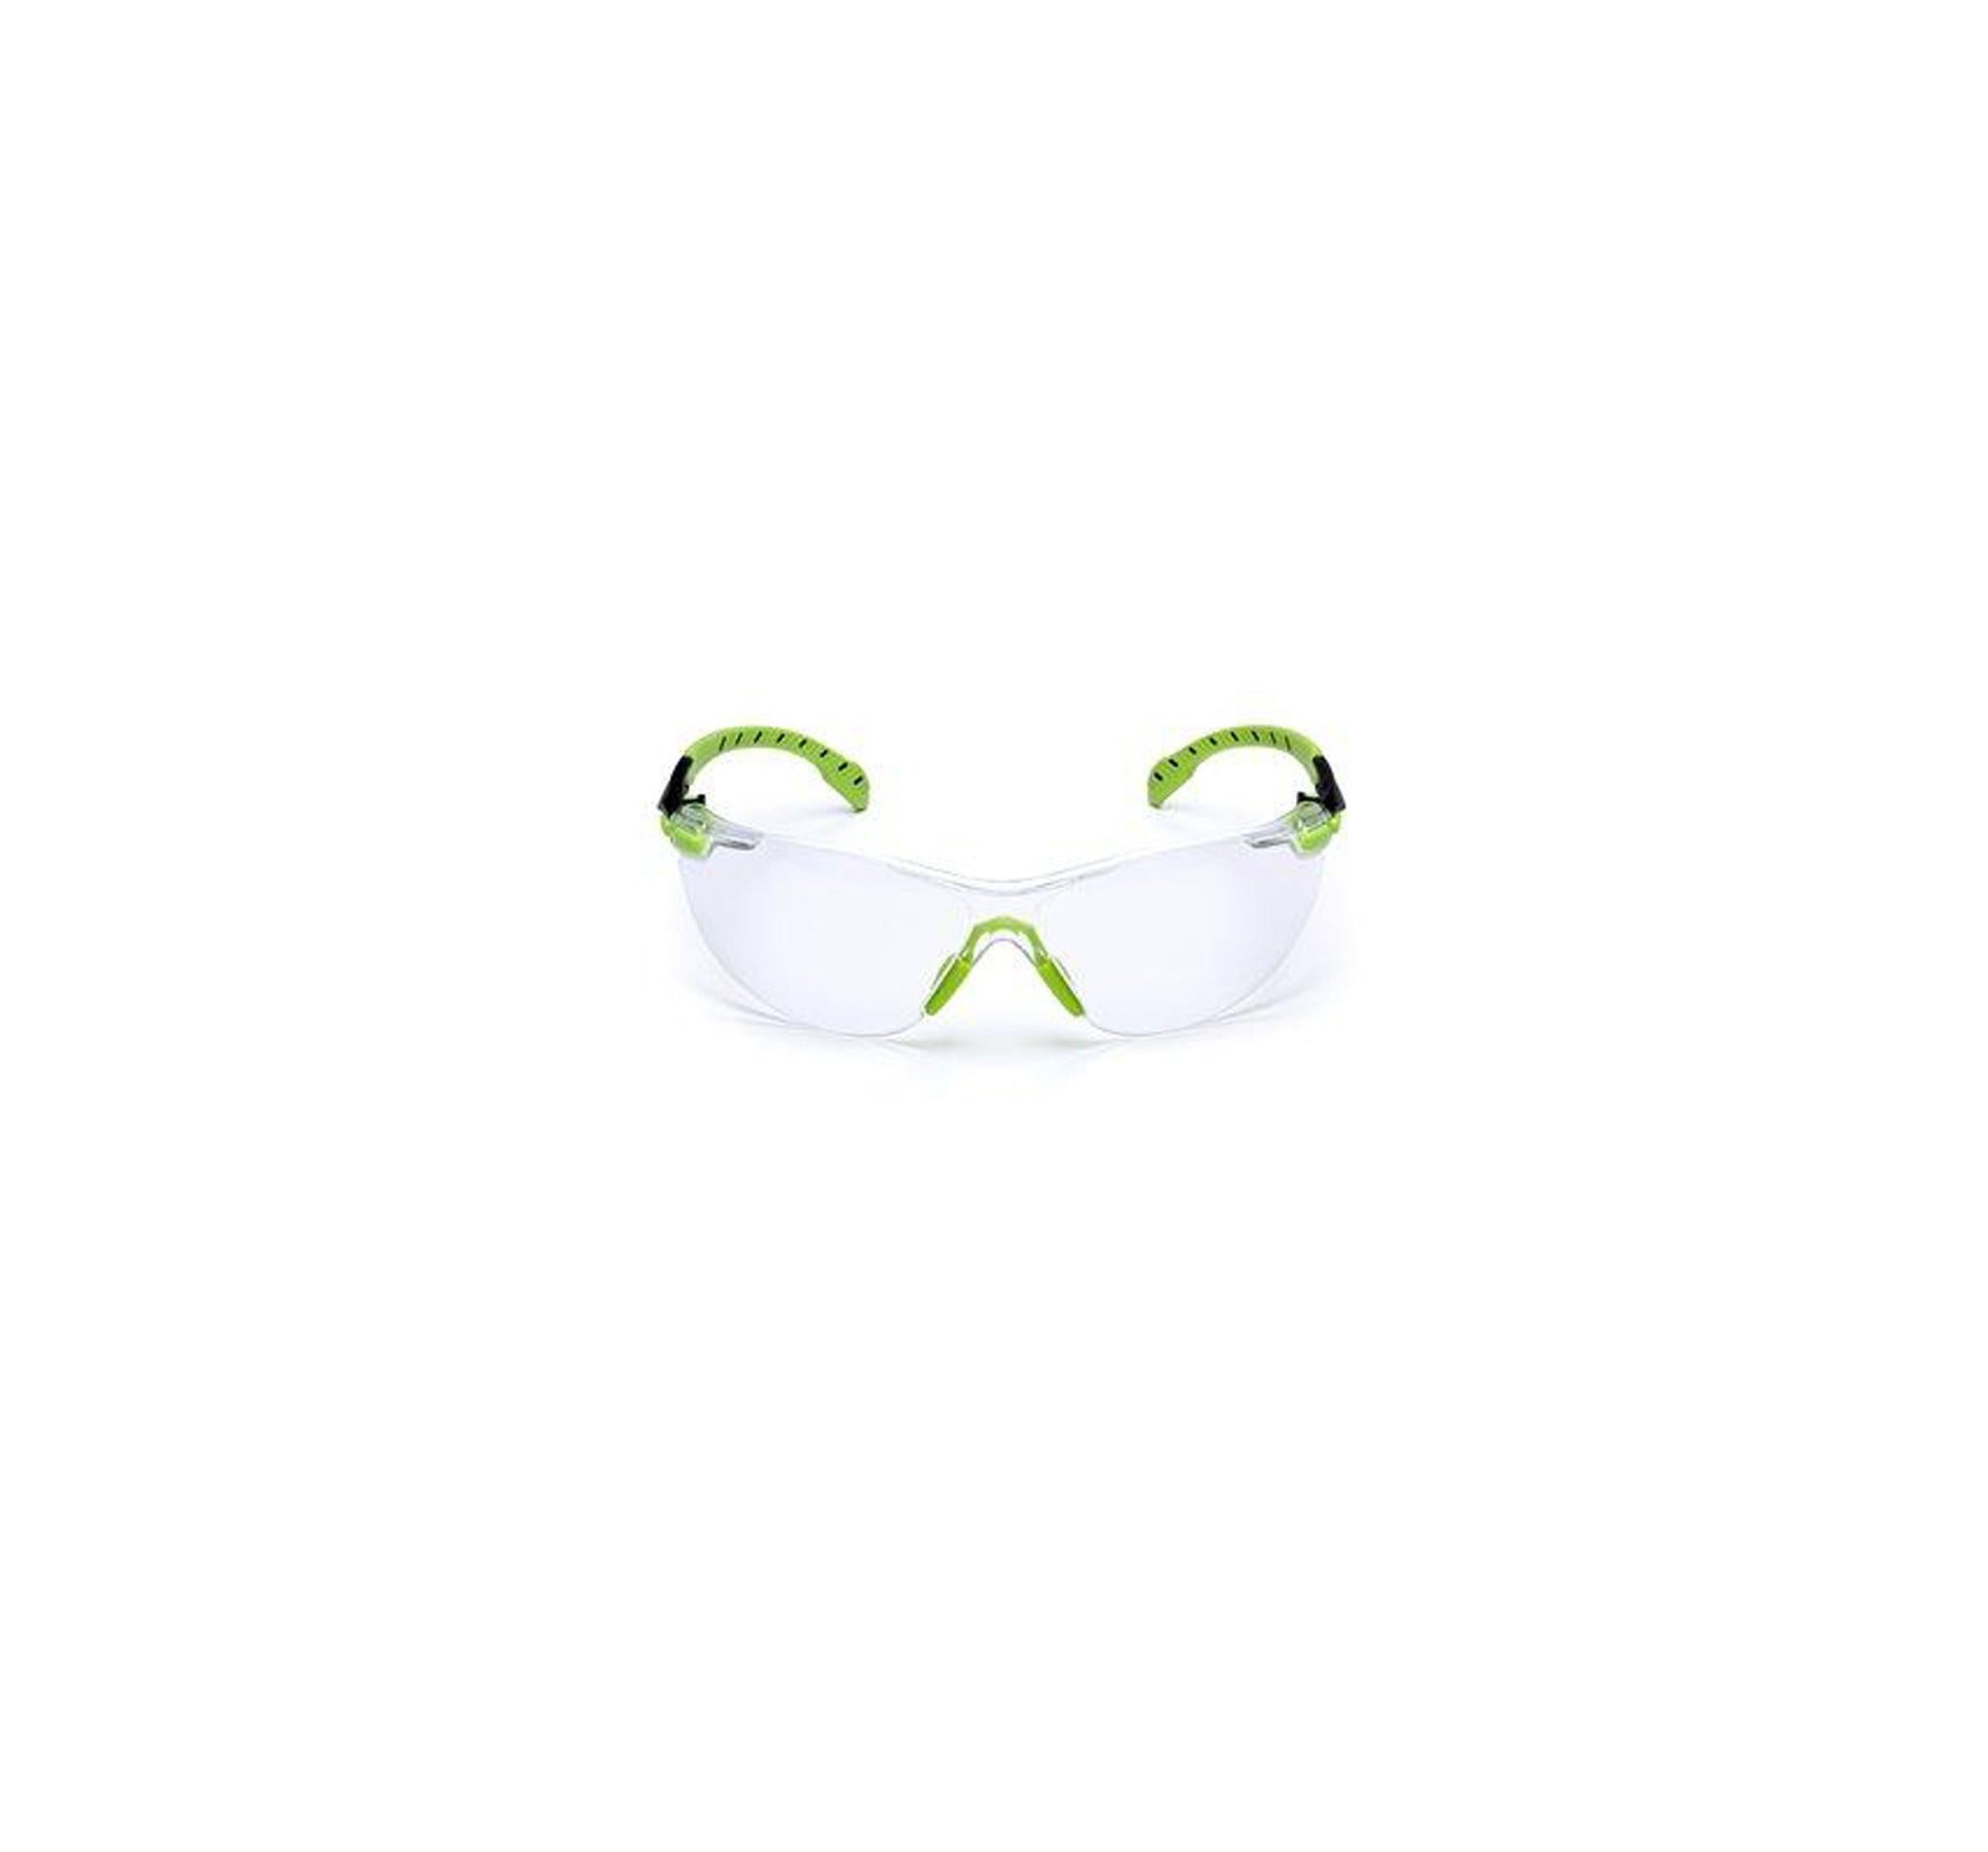 3M Solus 1000 Series Protective Eyewear, Clear Poly Antifog Lens, Green/Black Frame